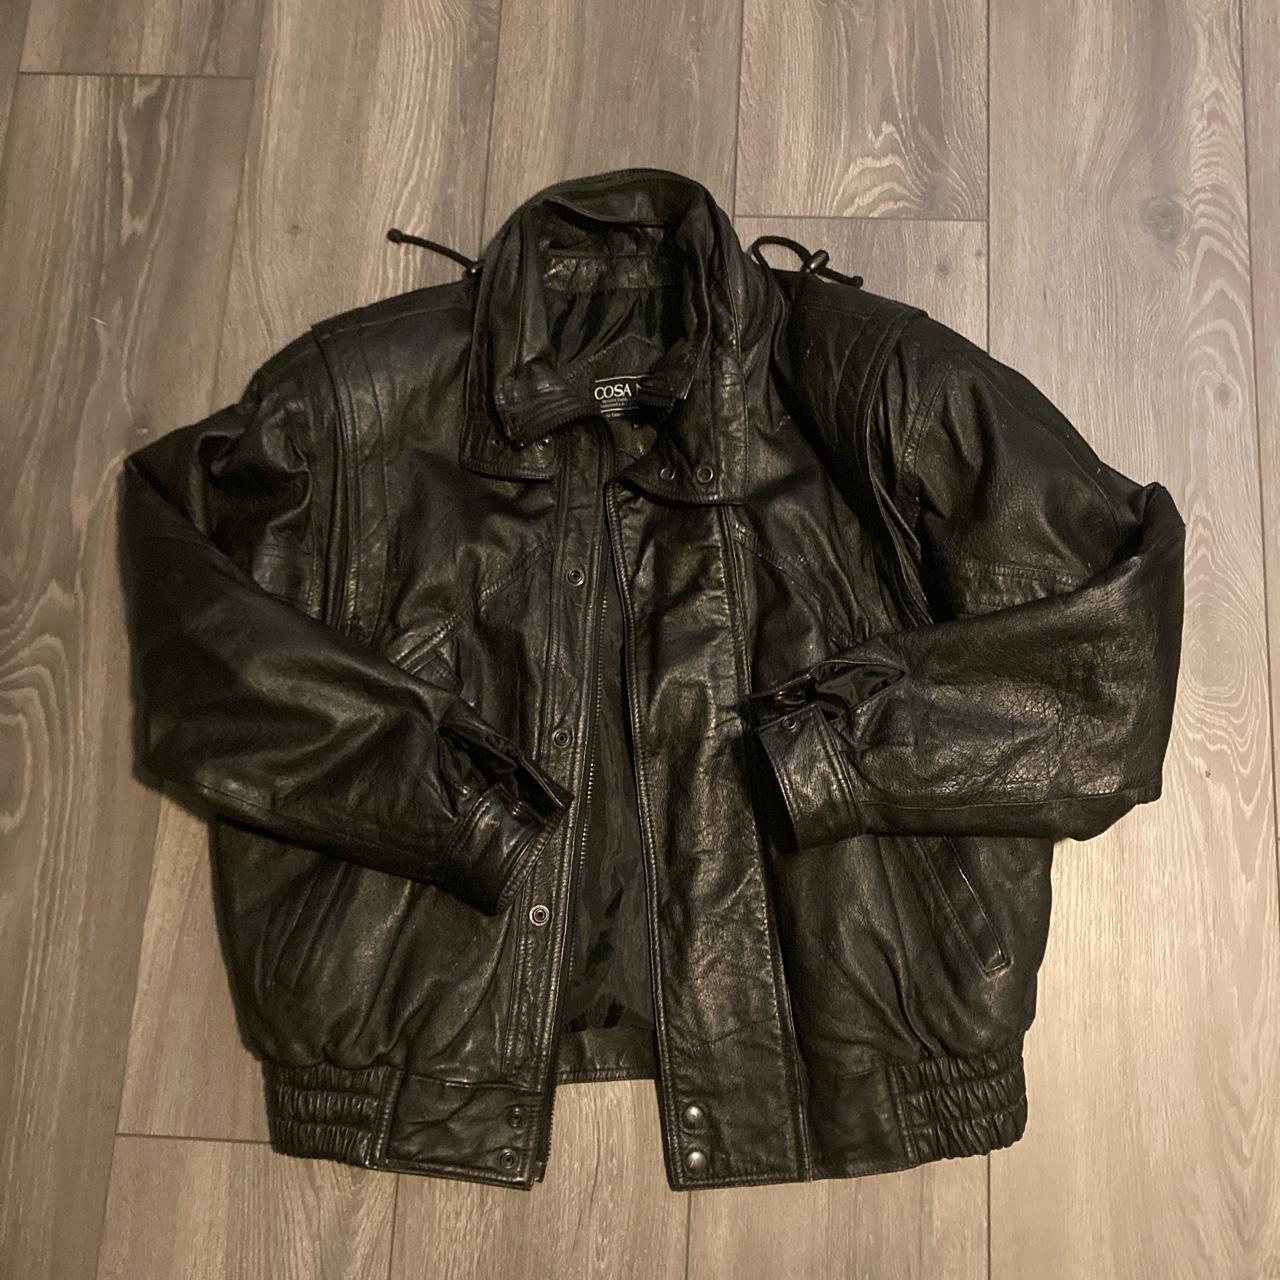 Insane vintage leather jacket(Cosa Nova) Size... - Depop